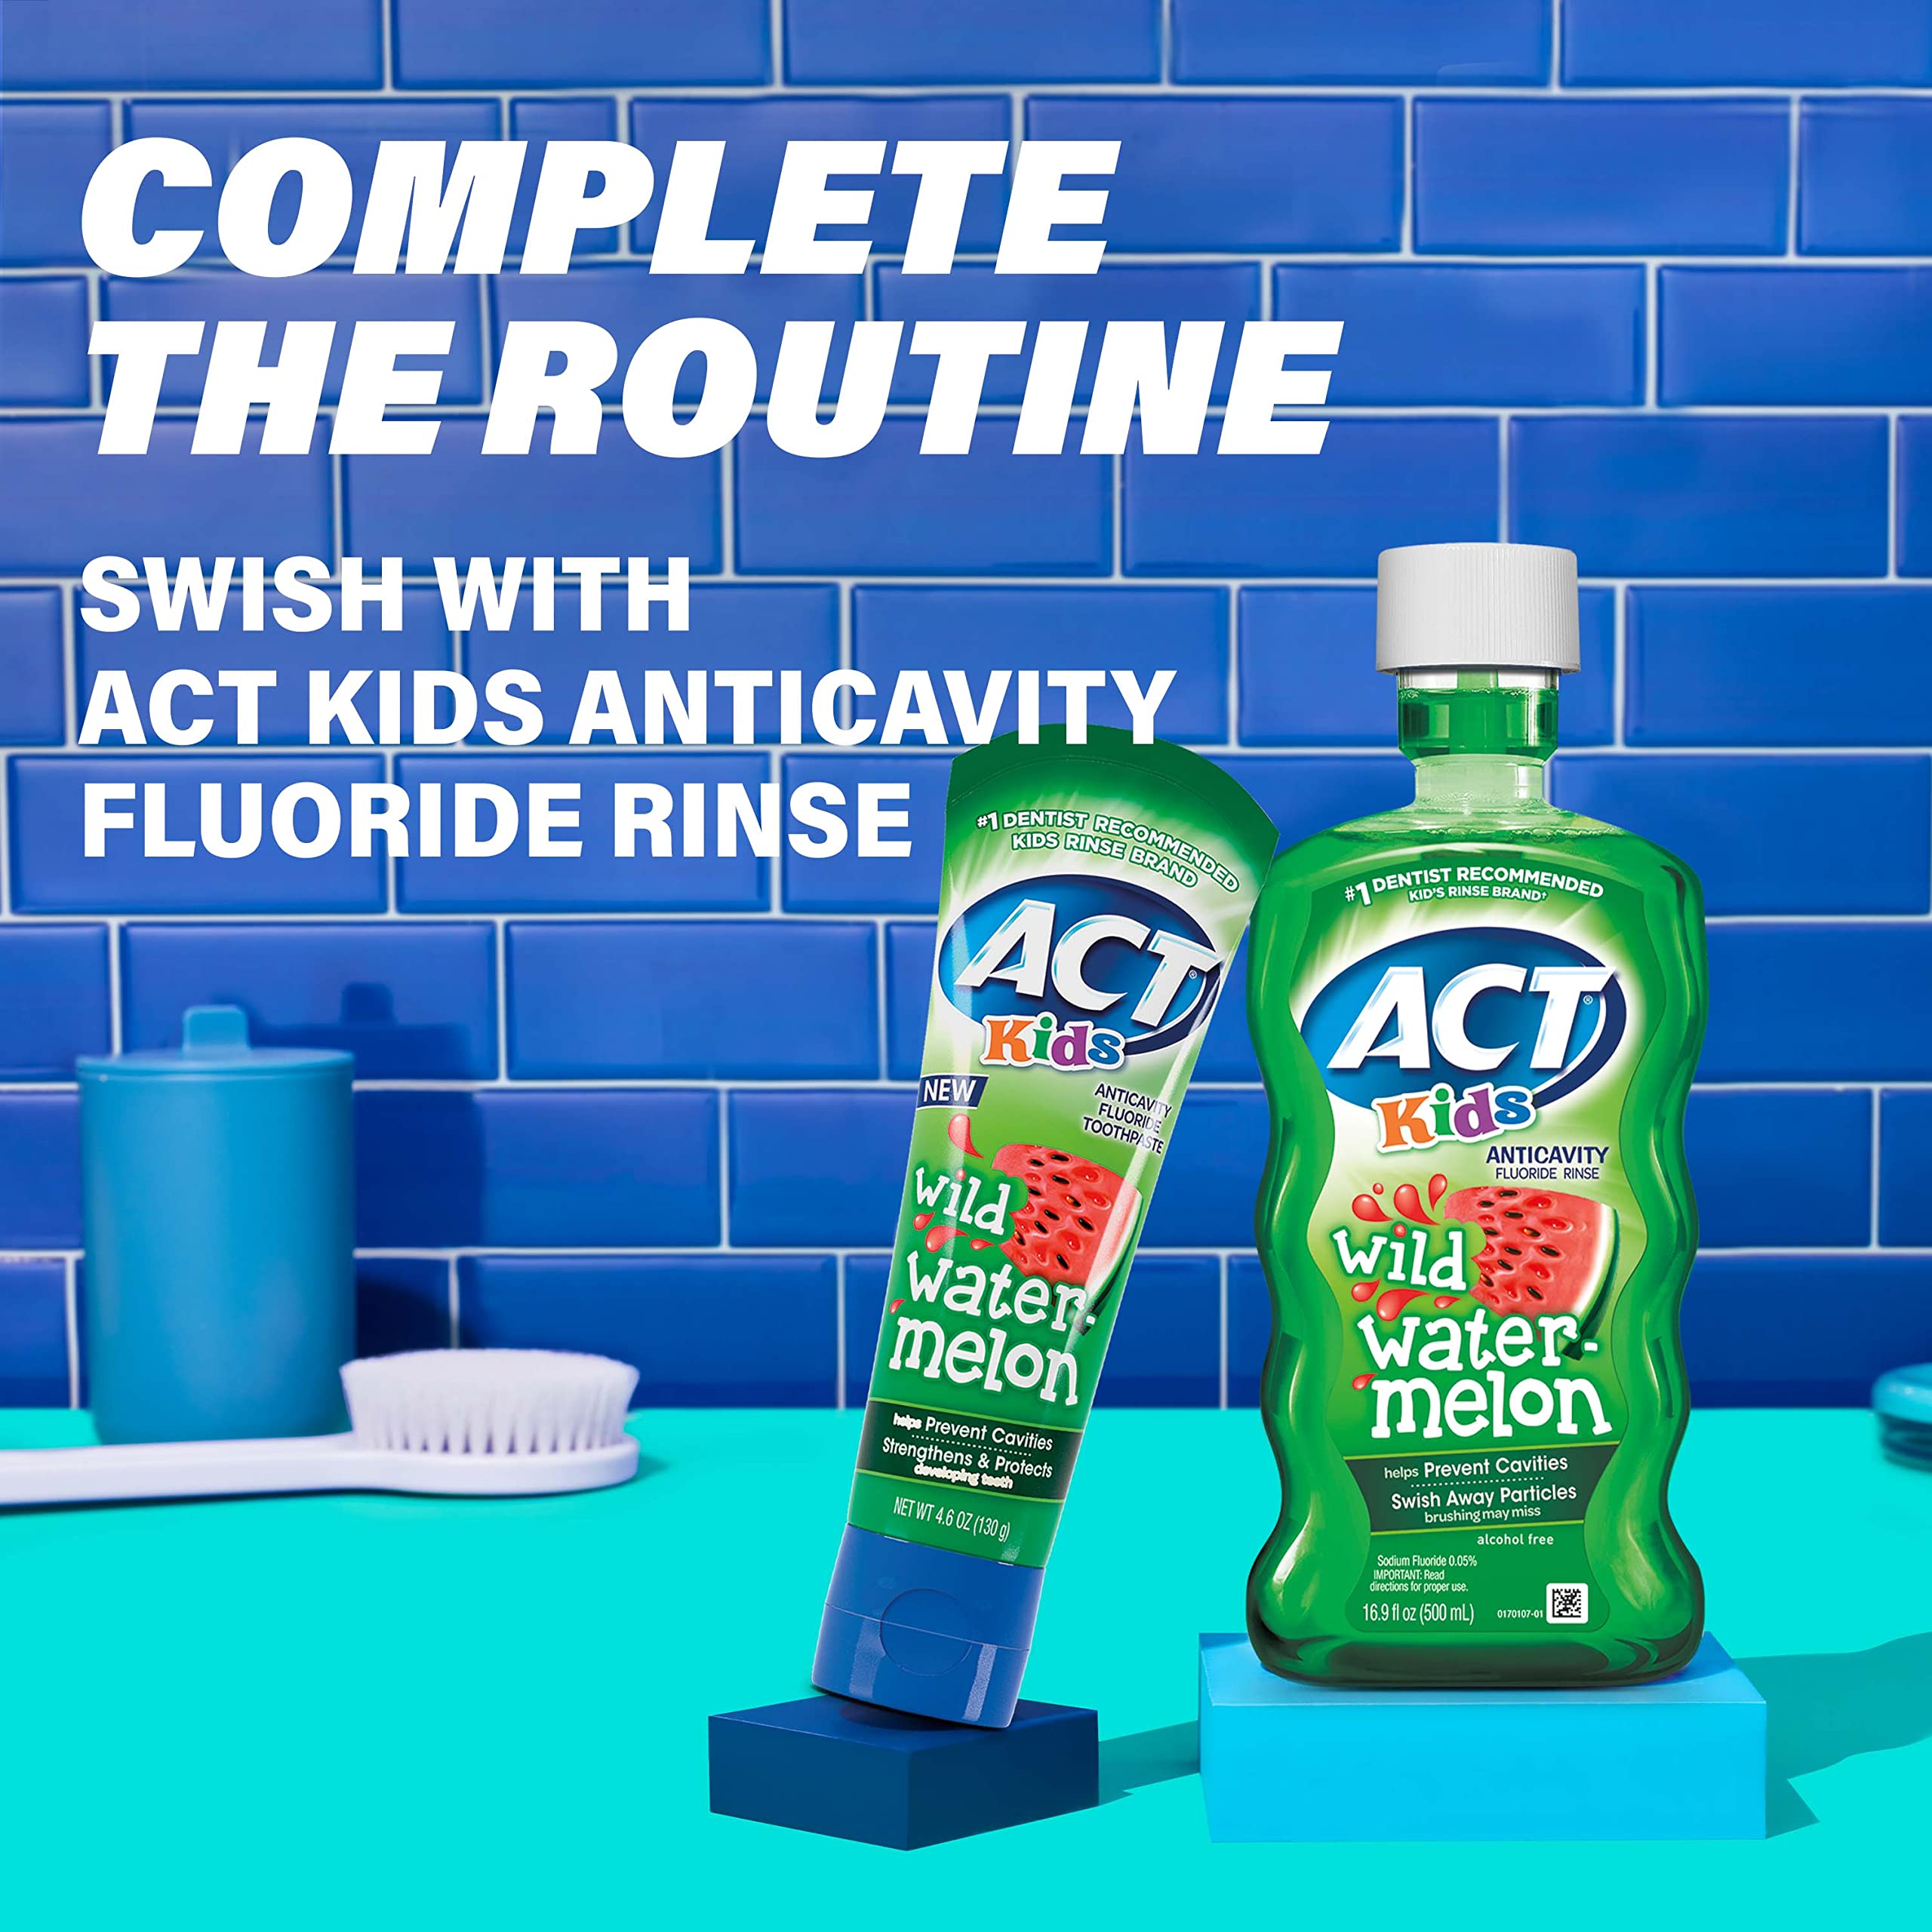 ACT Kids Anticavity Fluoride Toothpaste 4.6 oz. Wild Watermelon